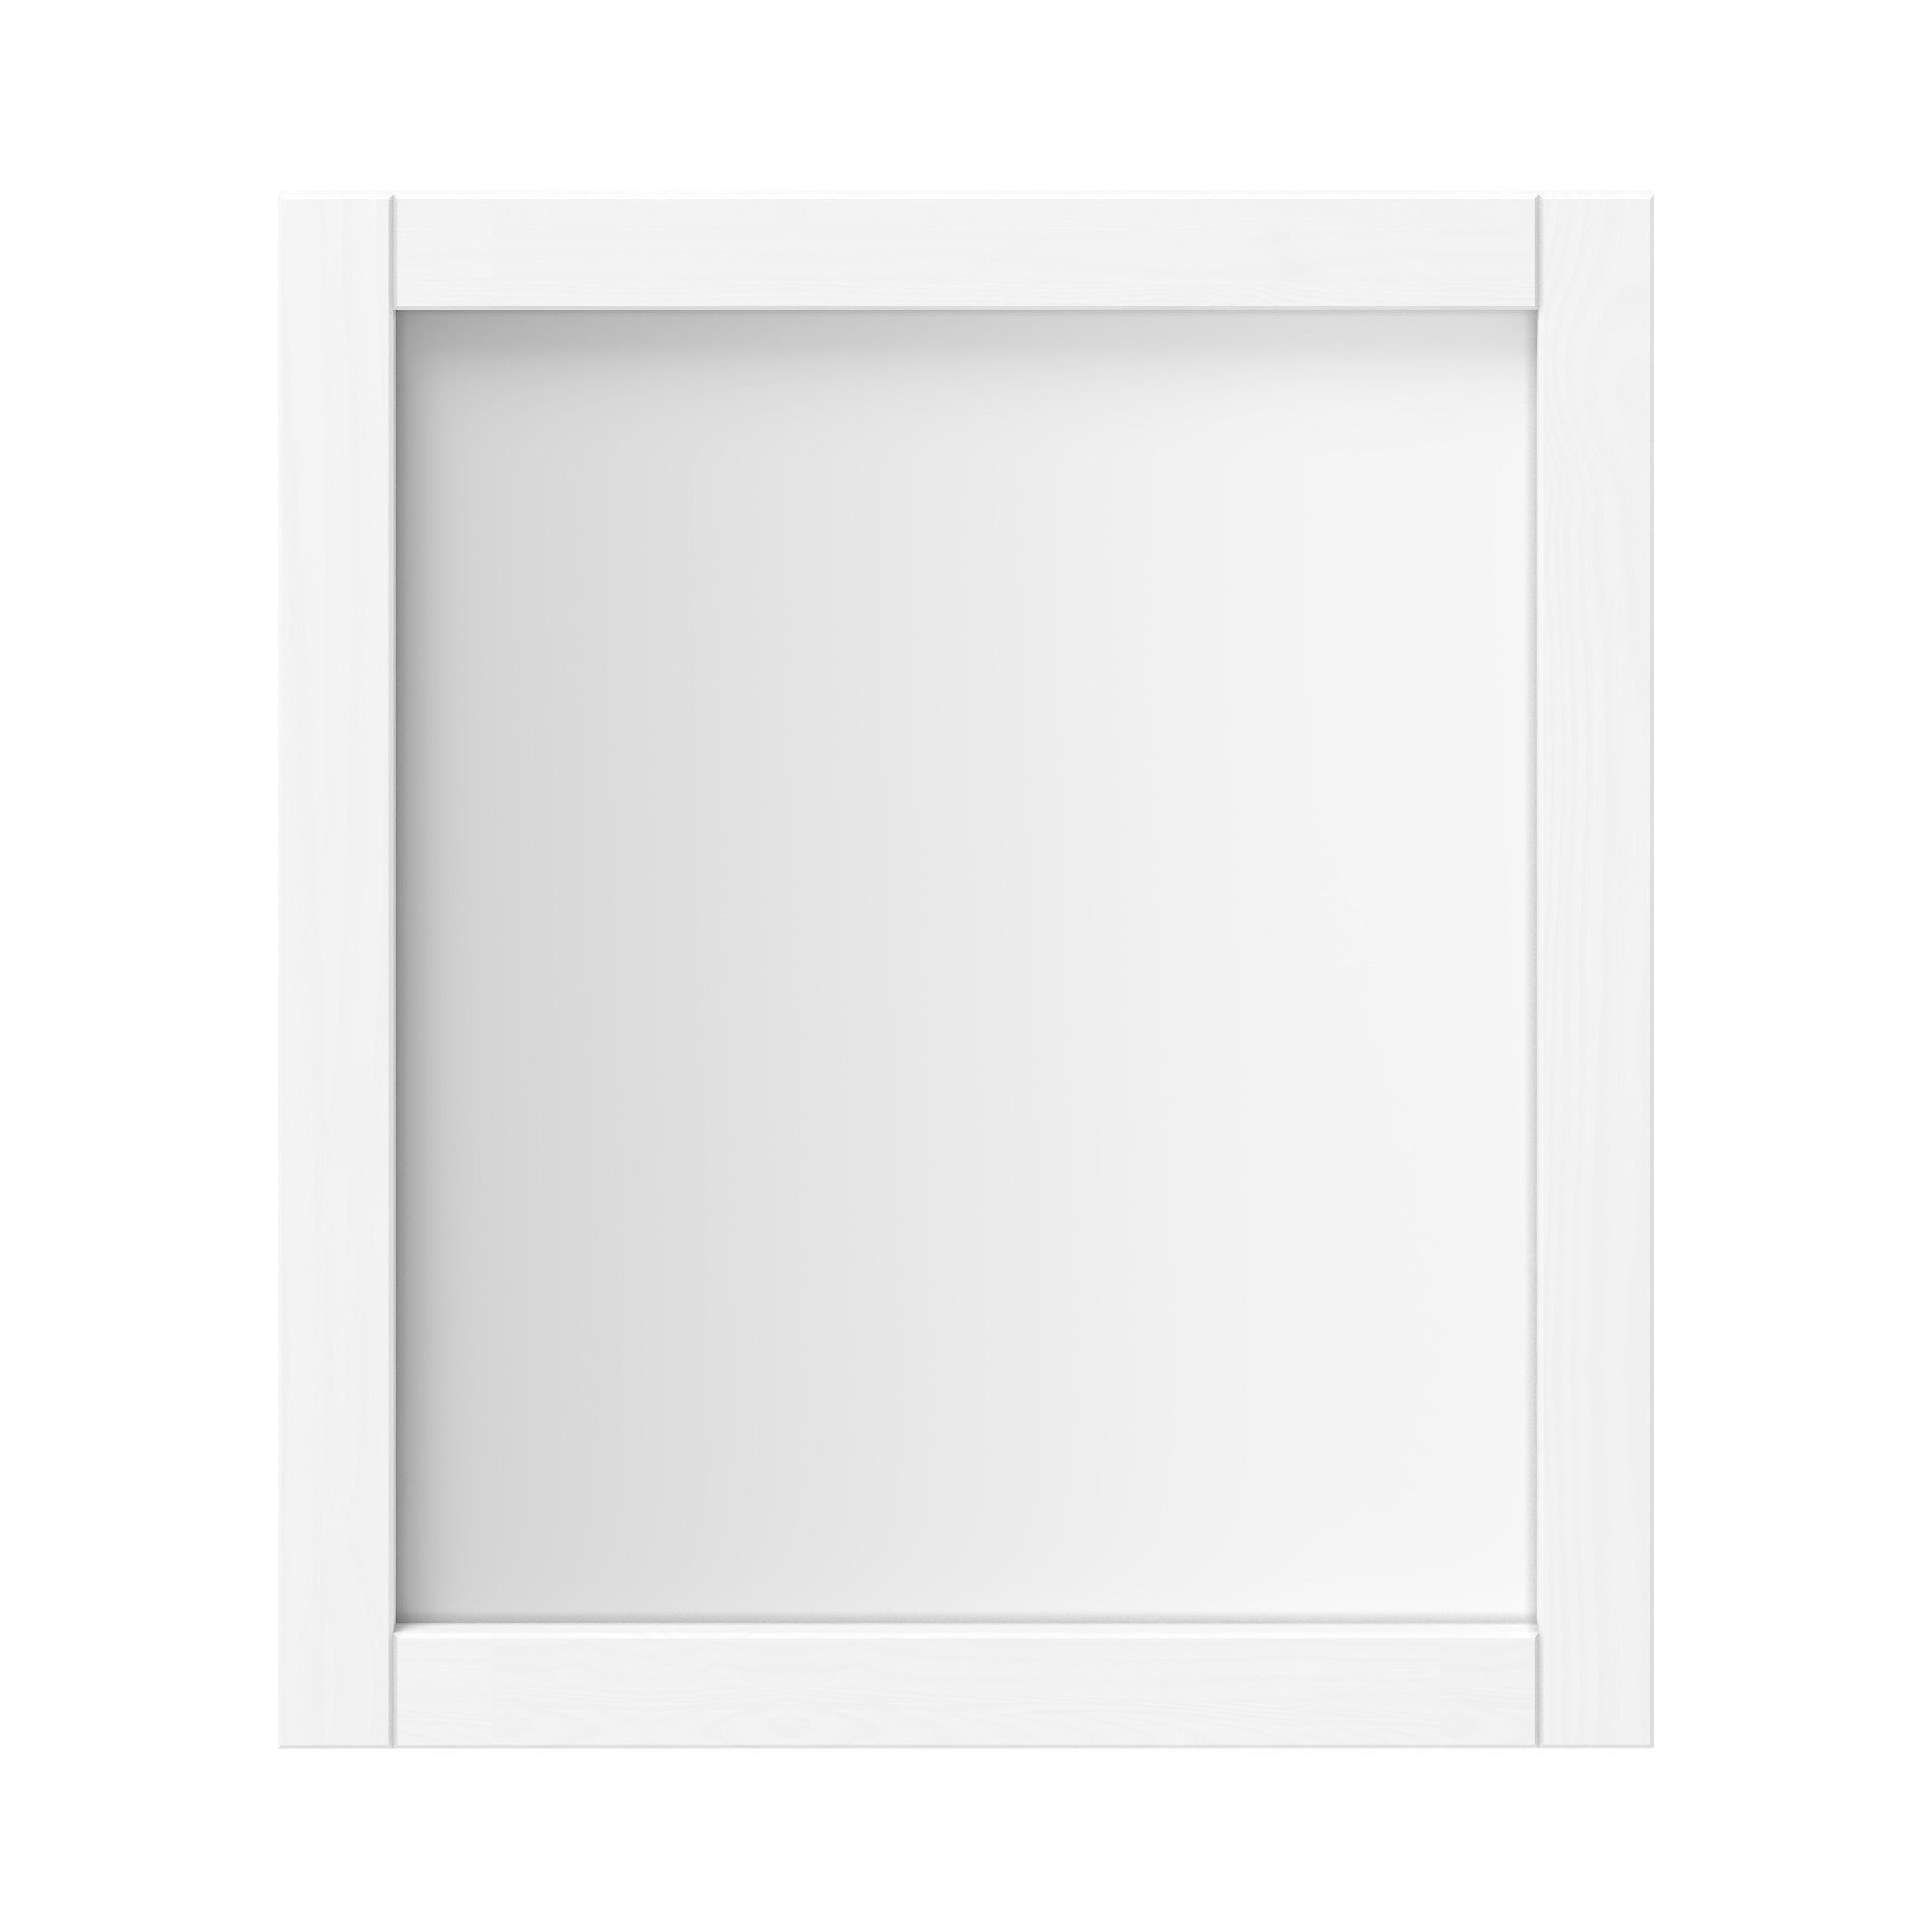 Woodroom Spiegel Valencia, Kiefer massiv lackiert, BxHxT 62x70x3 cm Weiß | weiß